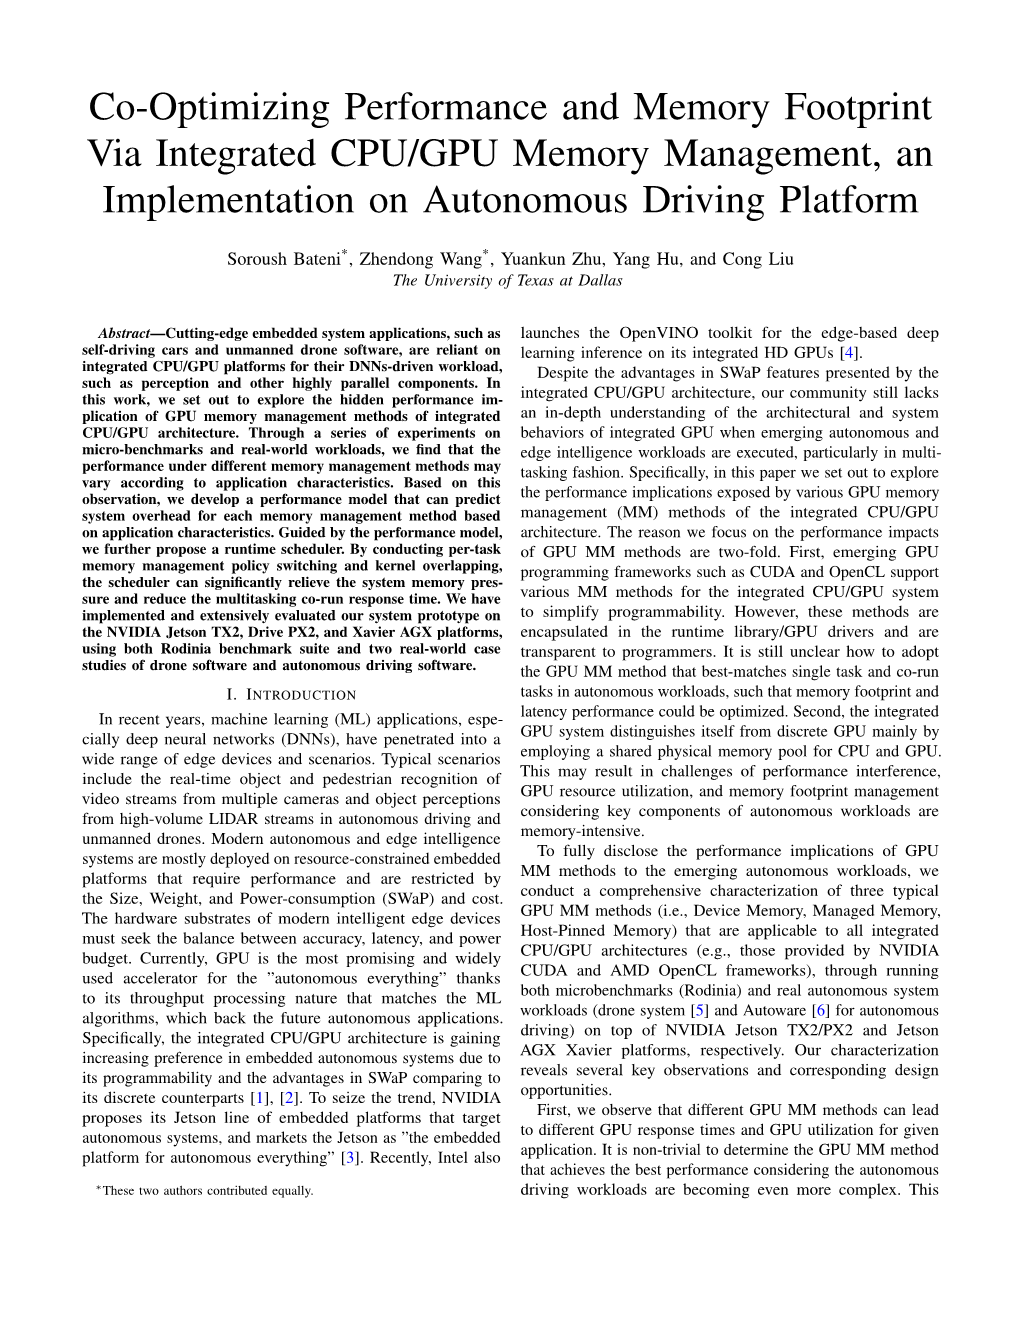 Co-Optimizing Performance and Memory Footprint Via Integrated CPU/GPU Memory Management, an Implementation on Autonomous Driving Platform